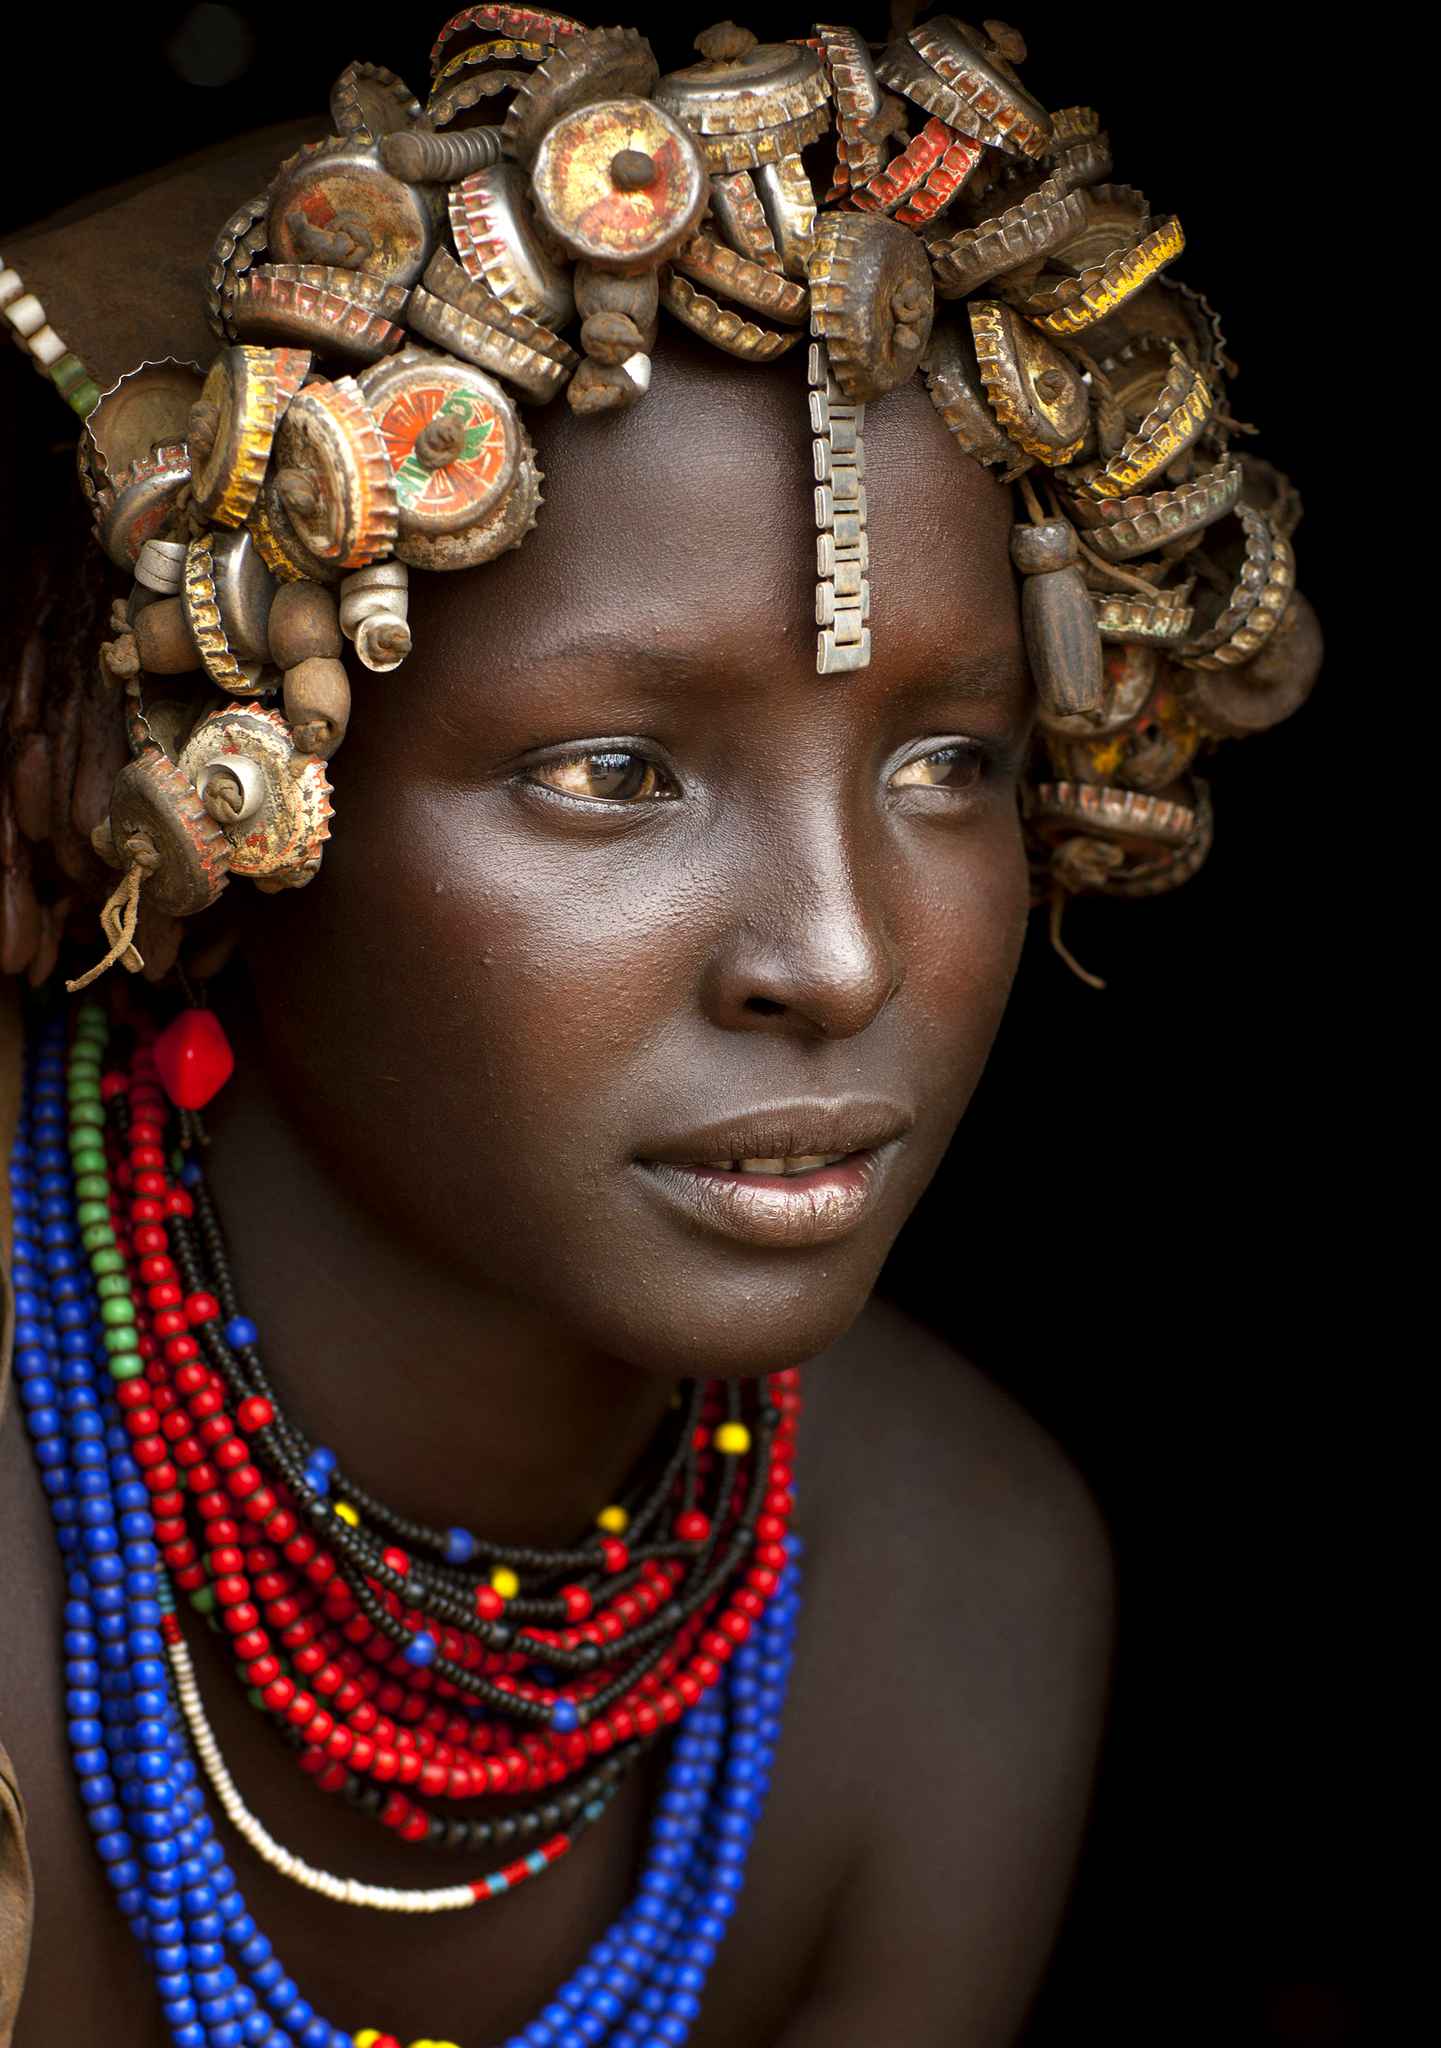 Tribe girl. Дасанеч Эфиопия. Племя дасанеч. Африканские красавицы из племени Мурси. Украшения африканских женщин.